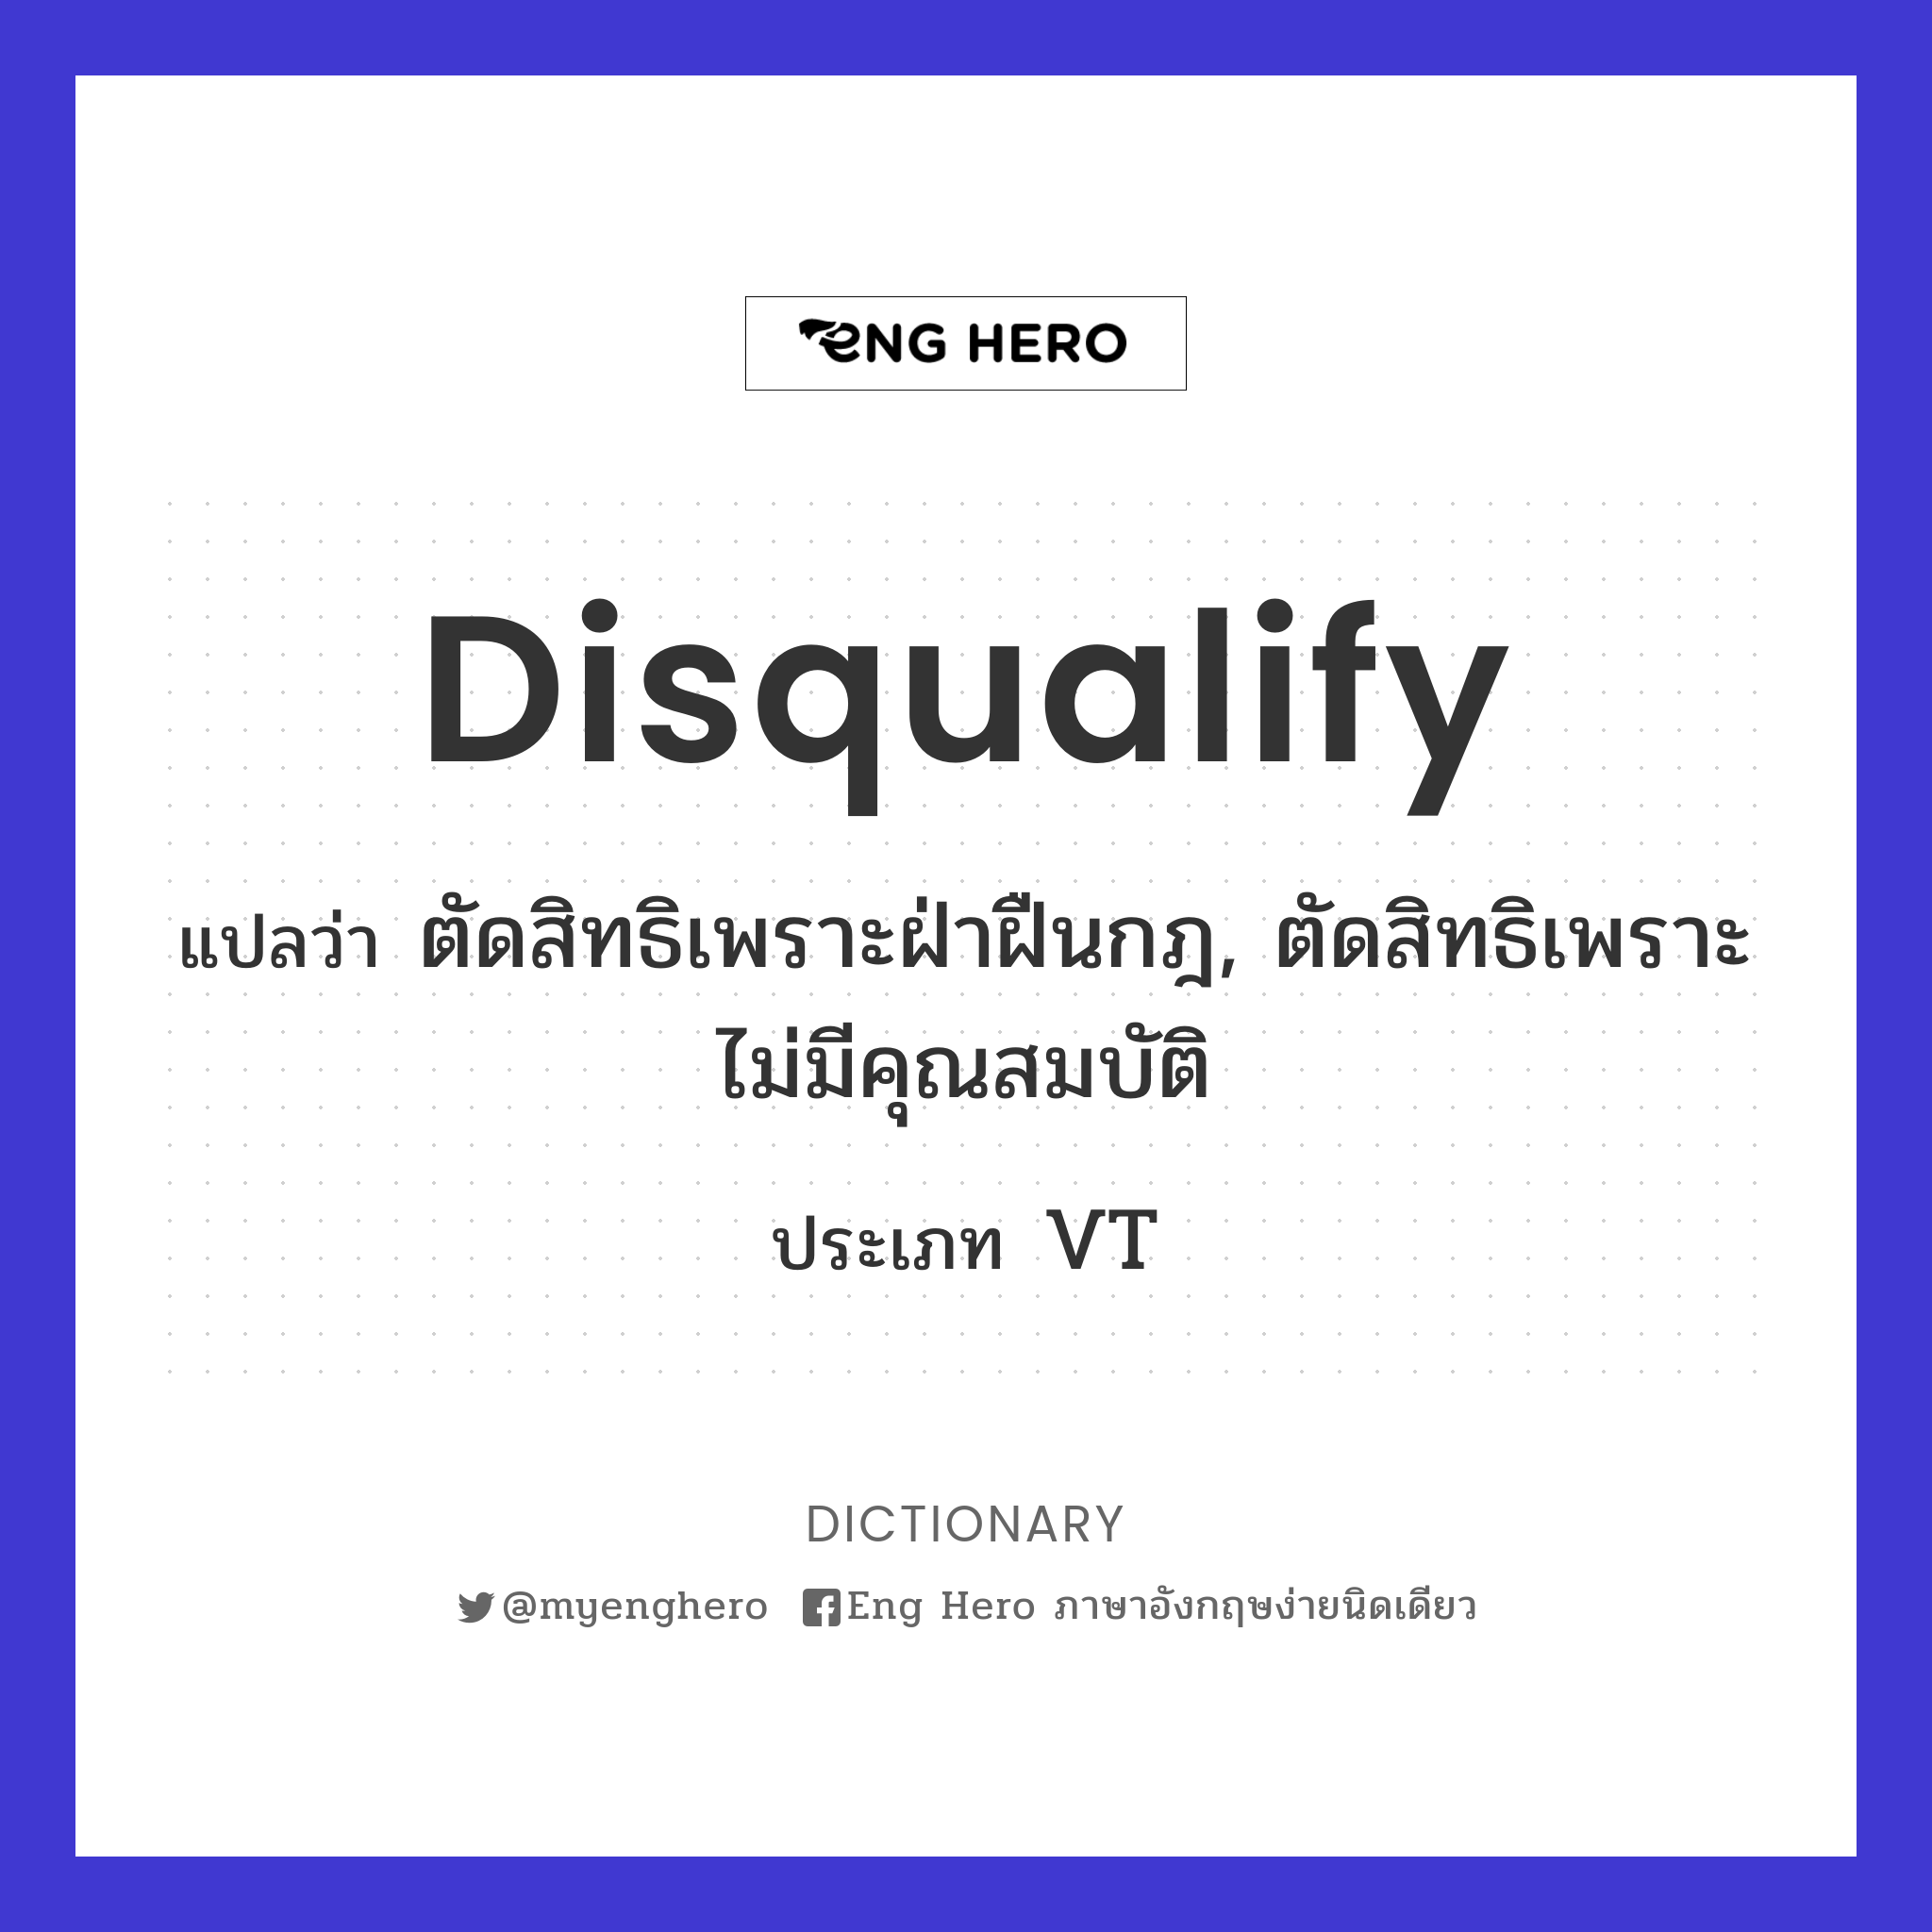 disqualify